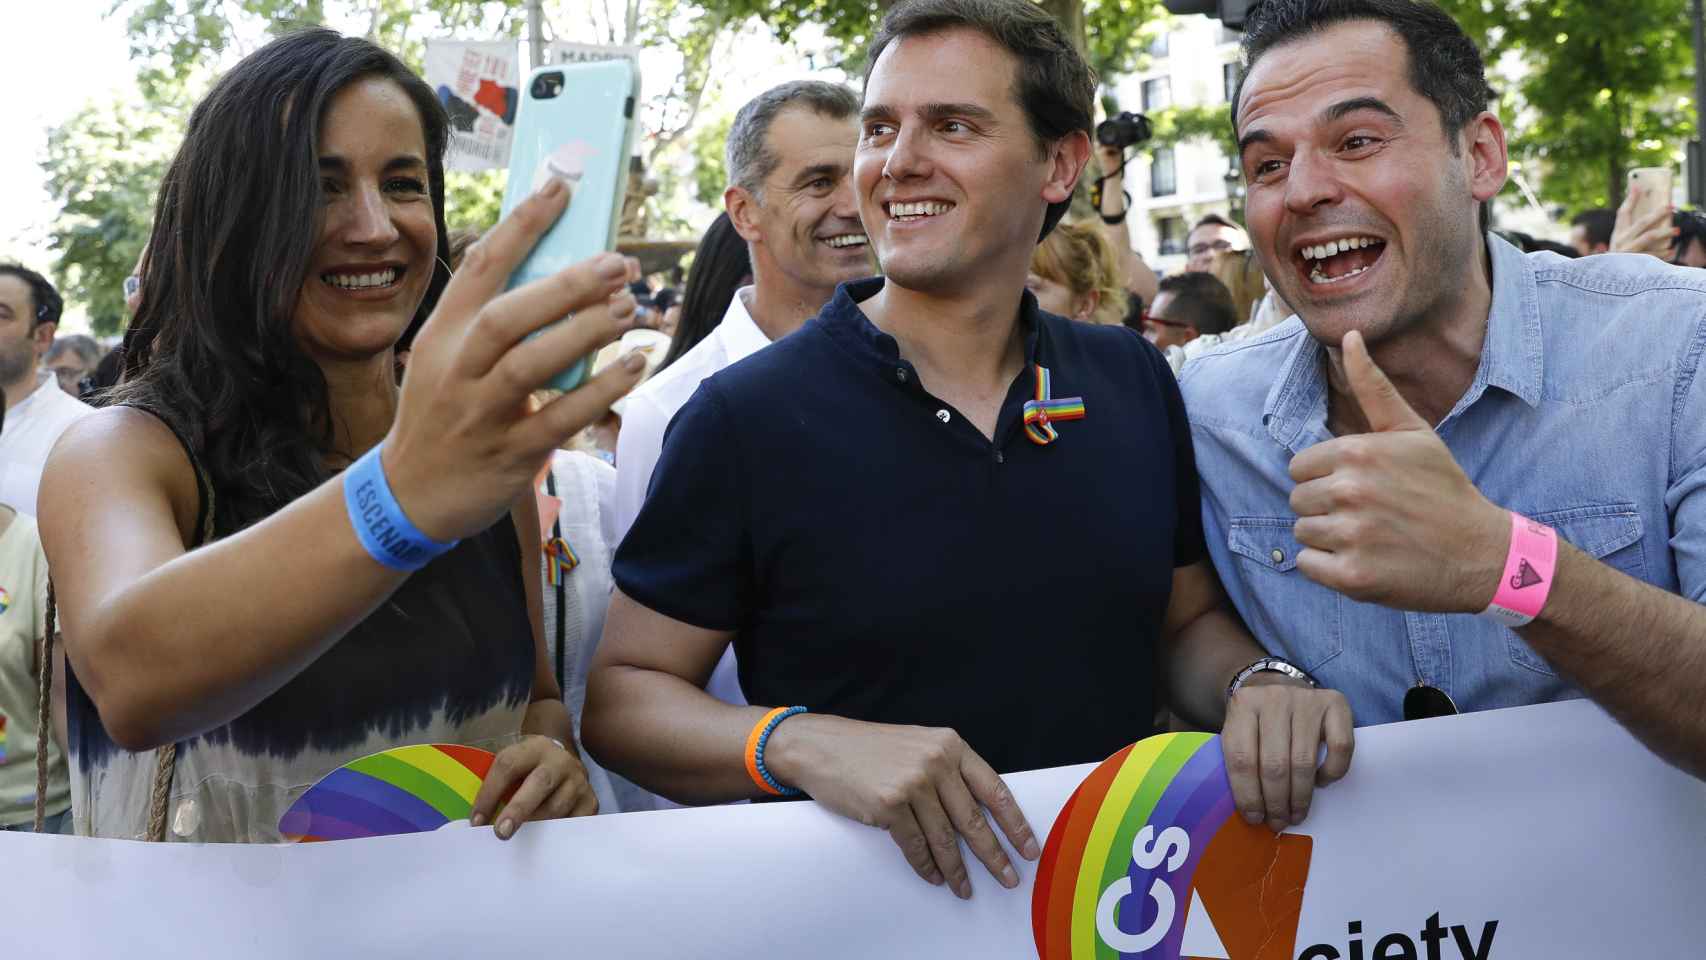 Begoña Villacís, Albert Rivera e Ignacio Aguado en el Orgullo Gay de 2018.